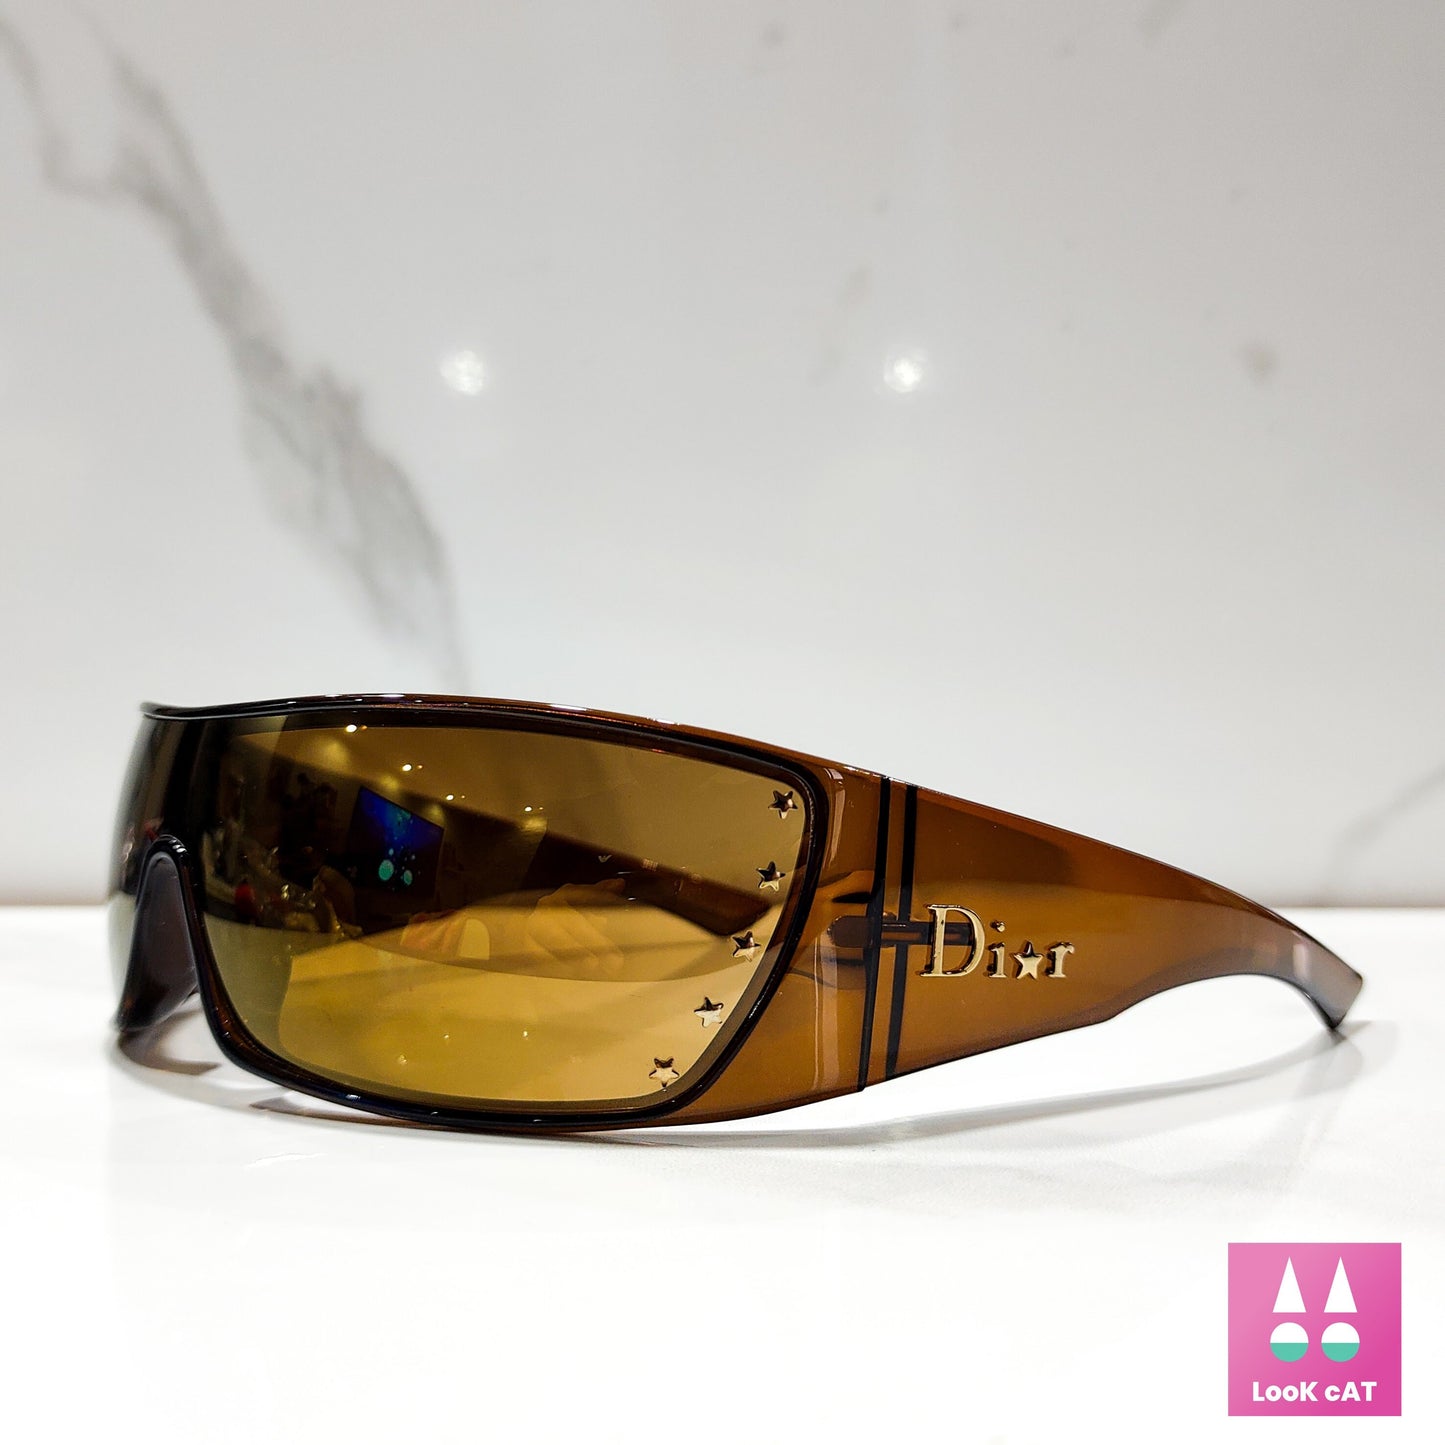 Christian Dior STELLE occhiali da sole vintage occhiali gafas y2k made in Italy avvolgente maschera scudo avvolgente